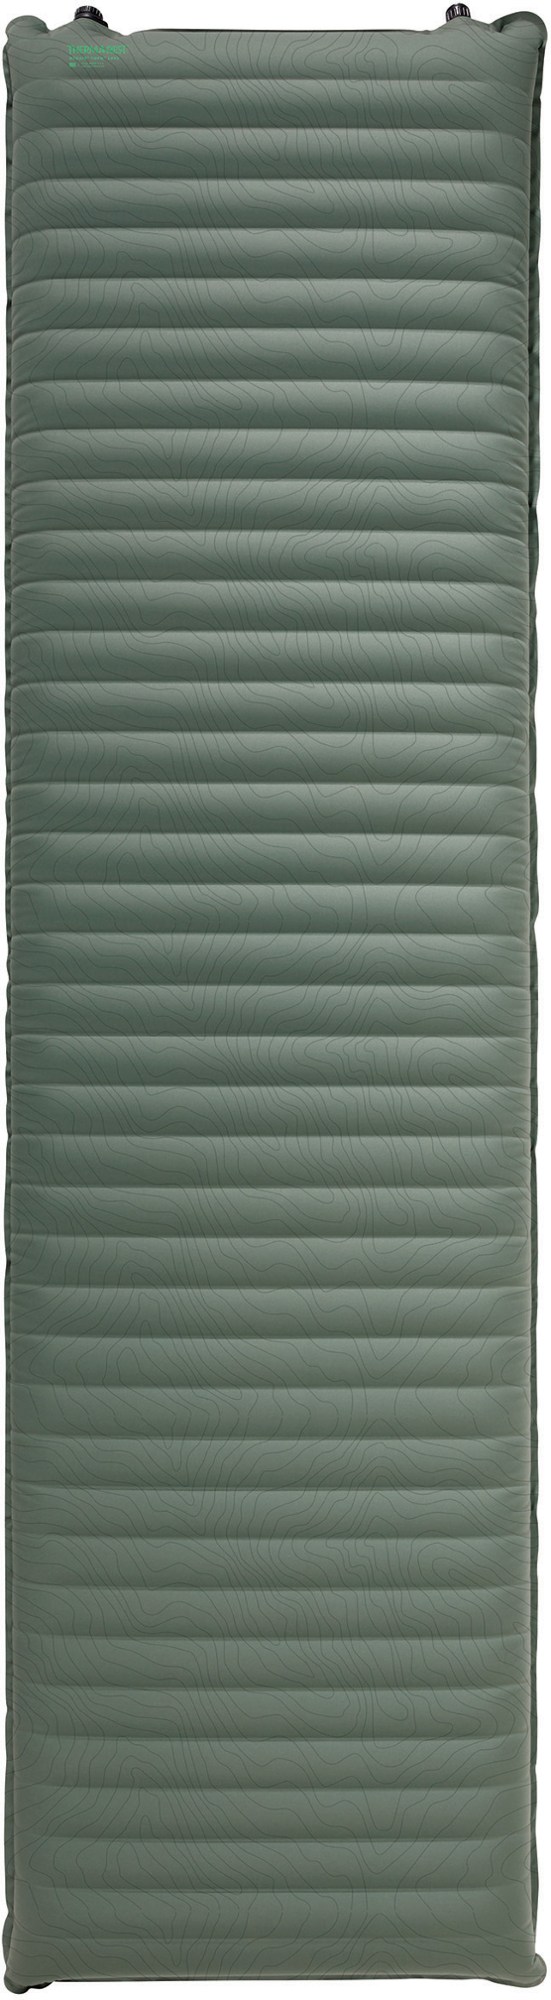 Спальный коврик NeoAir Topo Luxe Therm-a-Rest, зеленый лист synergy luxe therm a rest синий